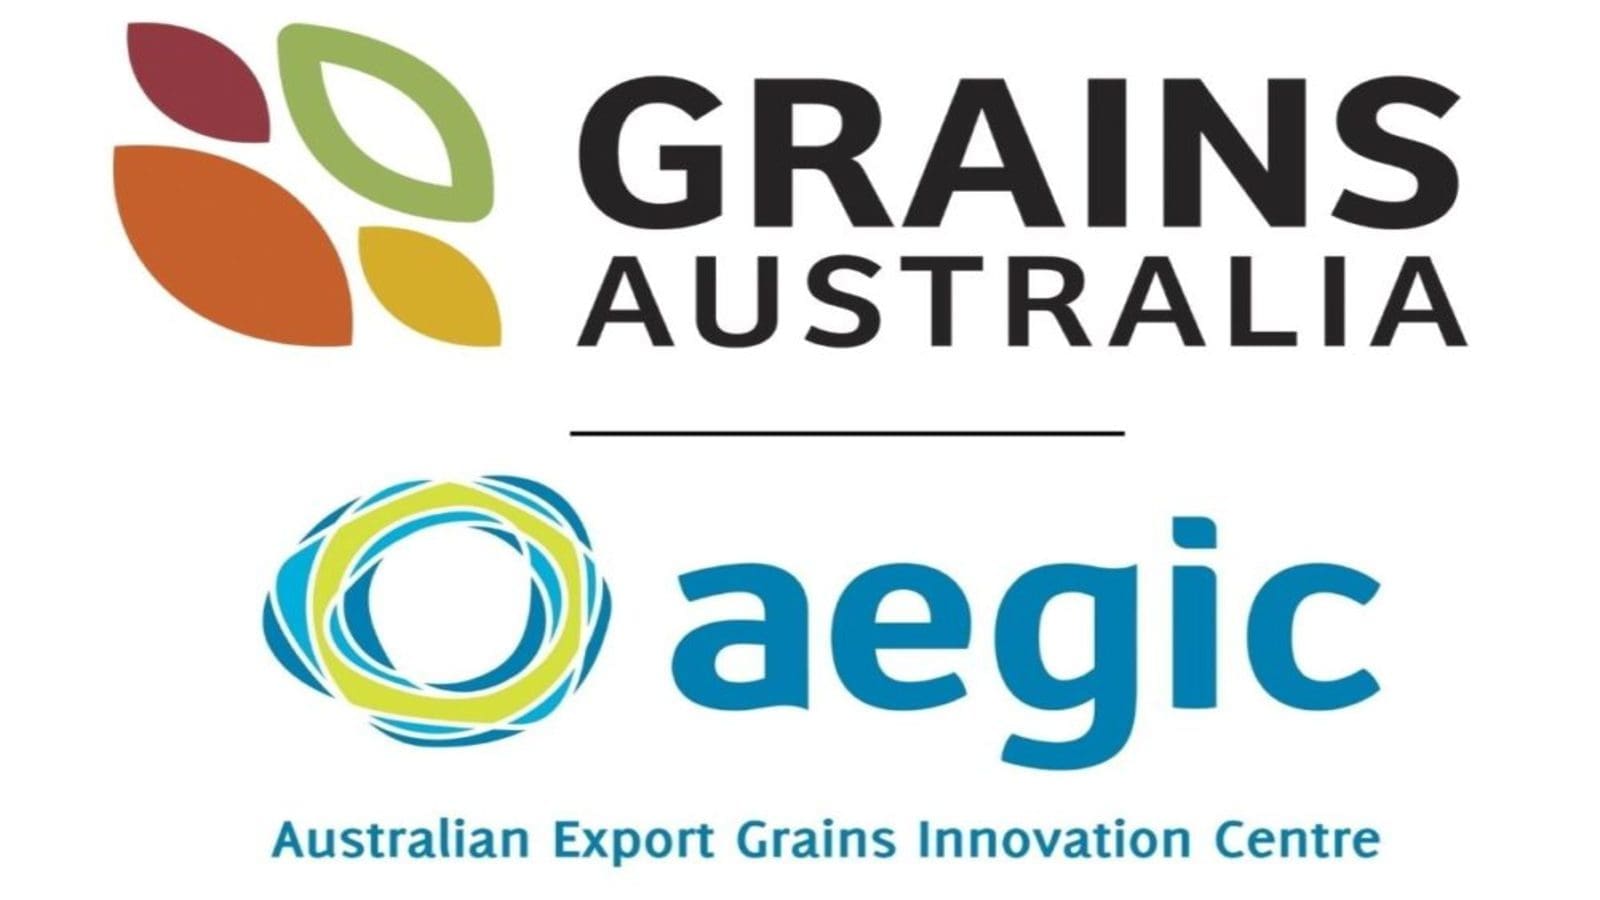 Strategic merger between Australian grain organizations promises efficiency 